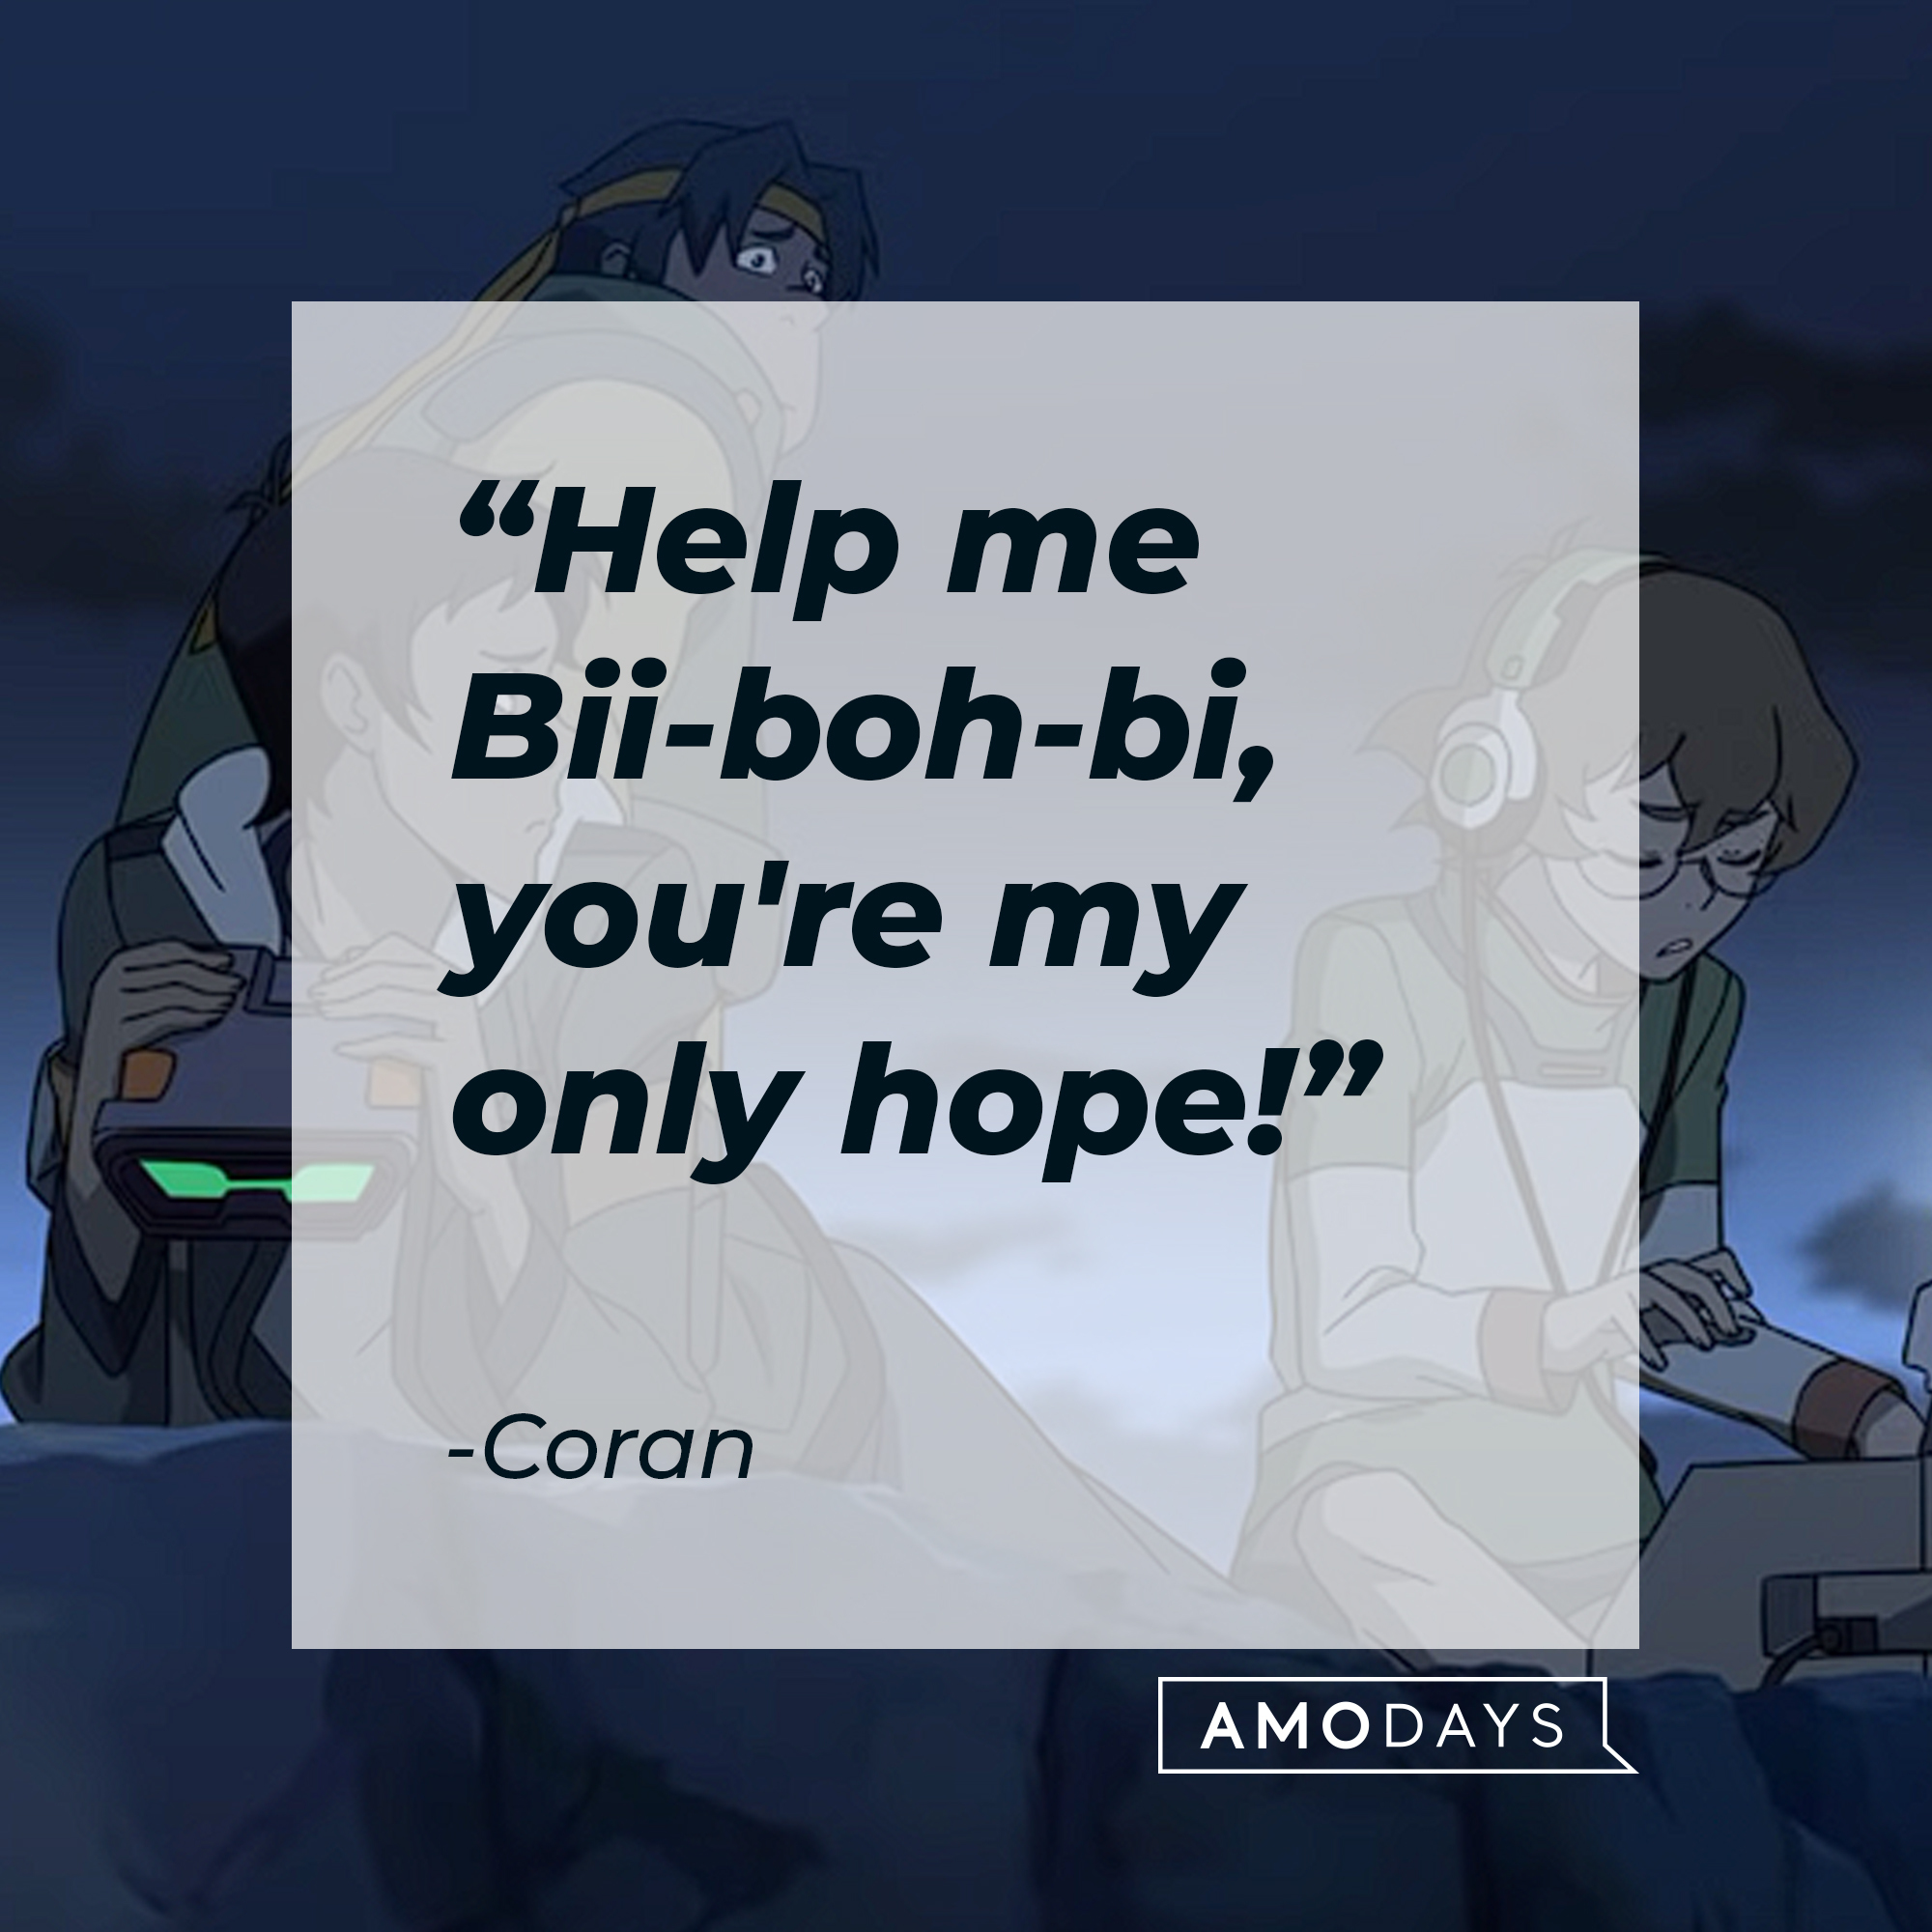 Coran's quote: "Help me Bii-boh-bi, you're my only hope!" | Source: youtube.com/netflixafterschool